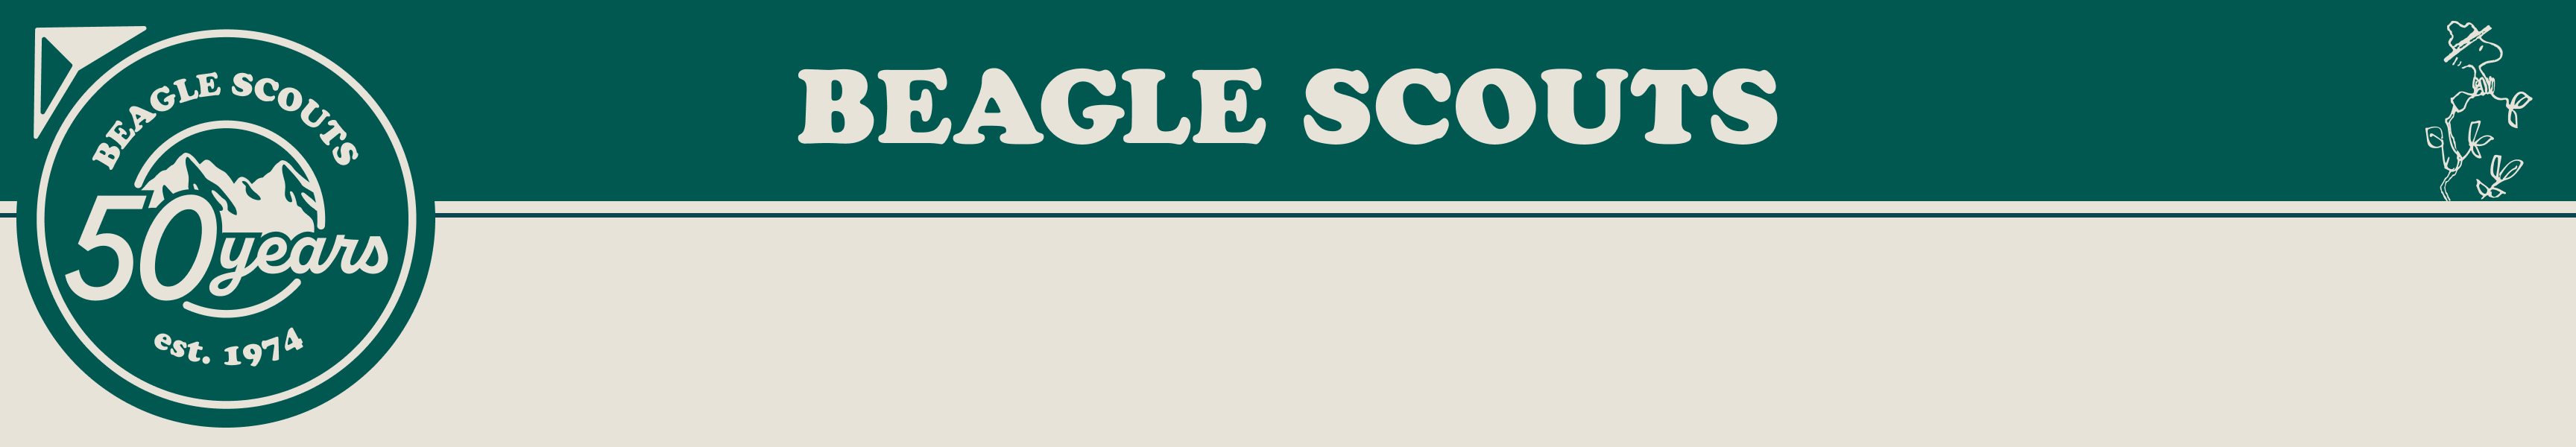 Beagle Scouts